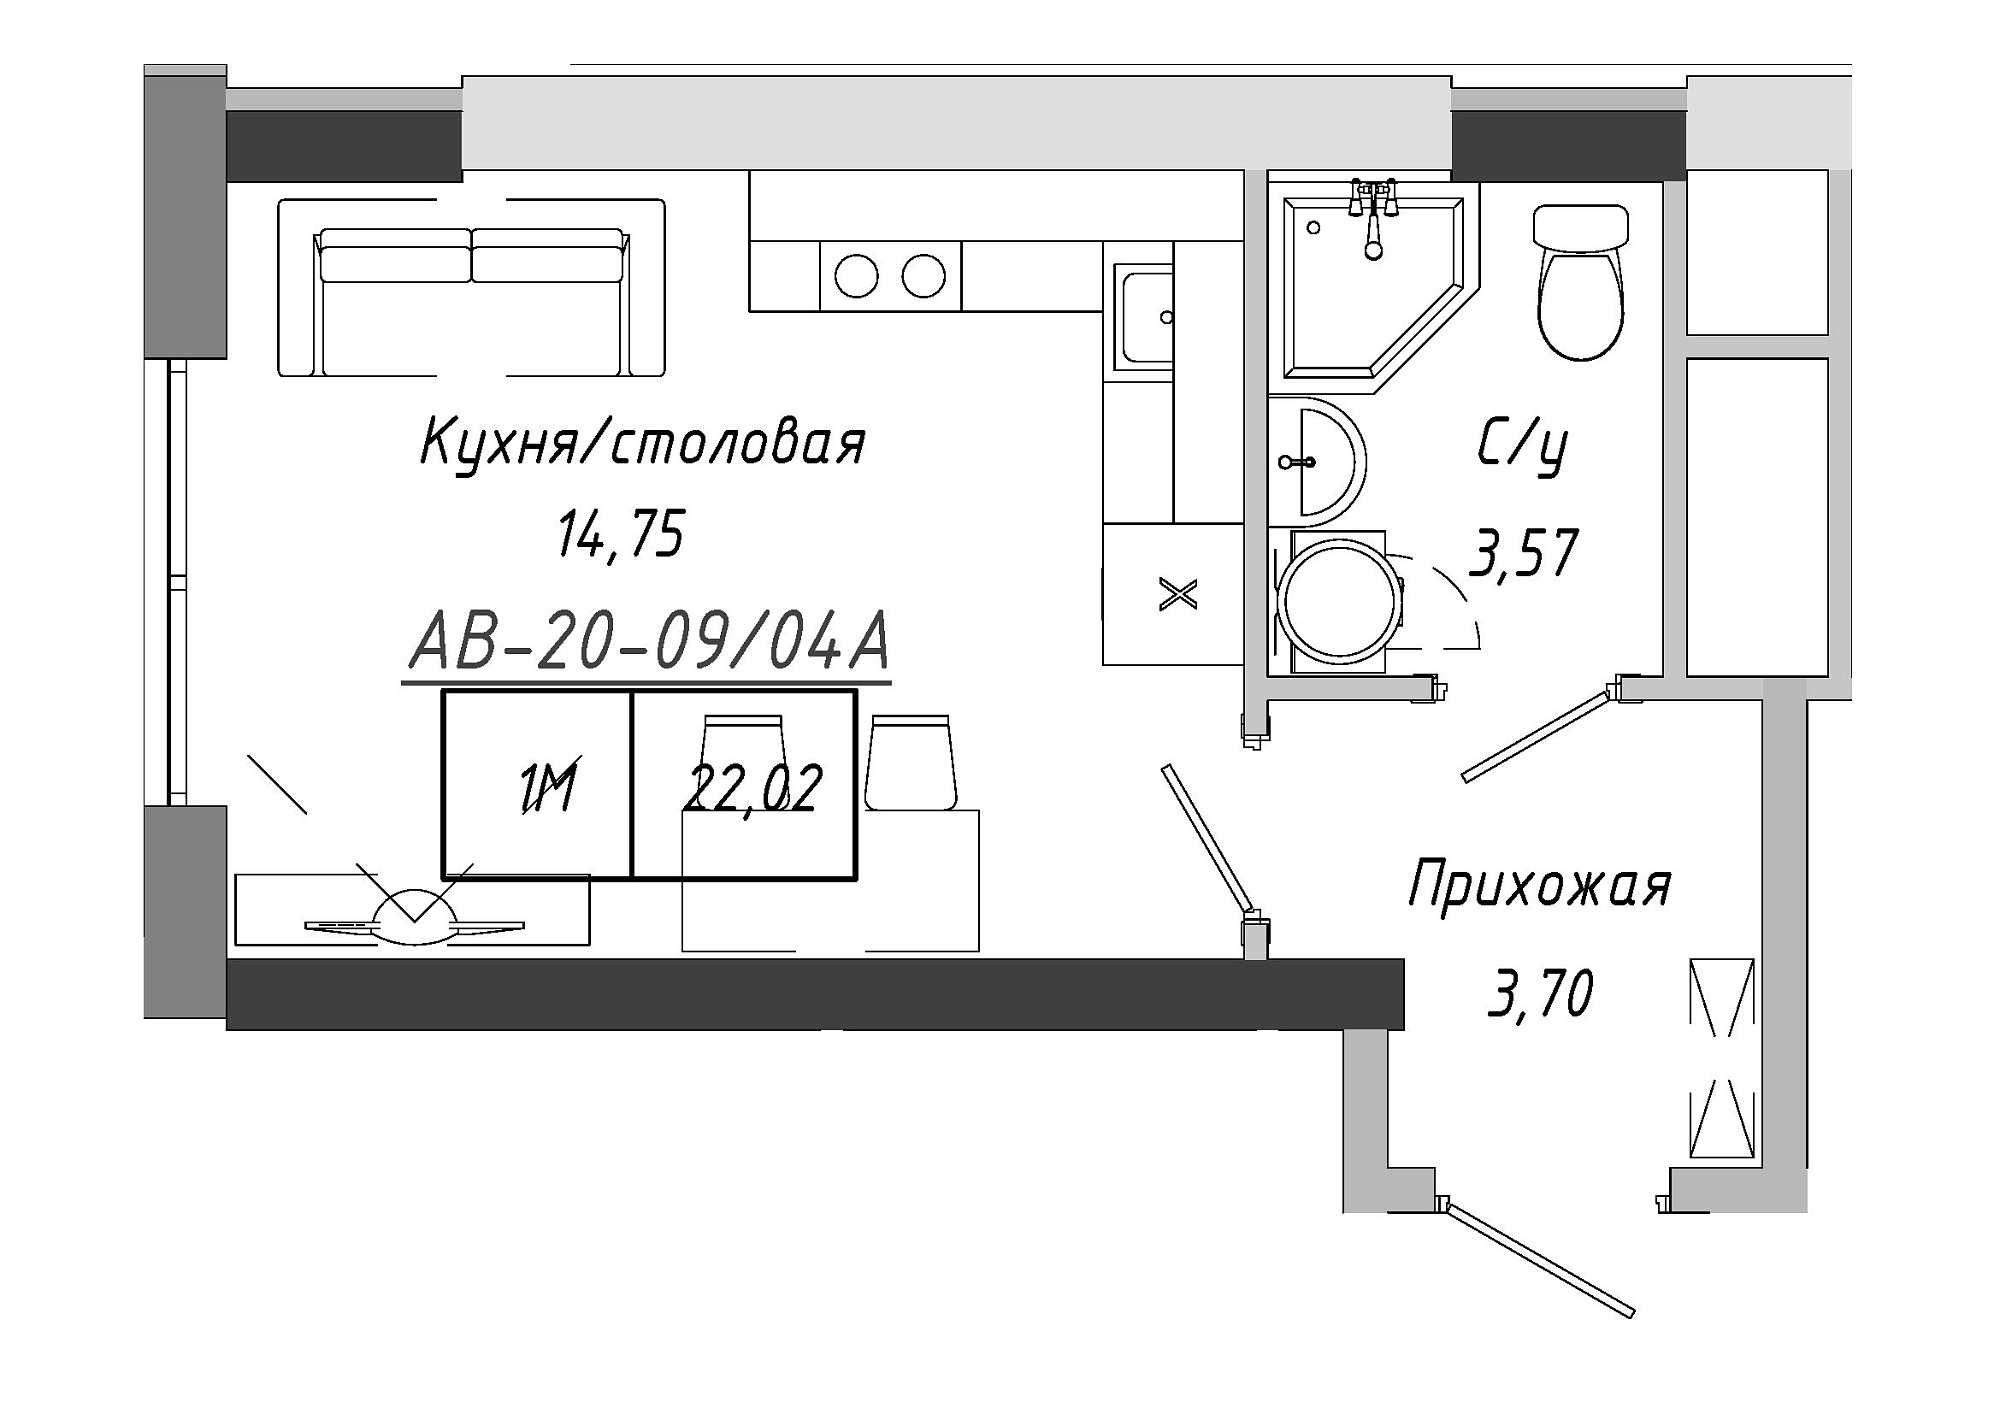 Planning Smart flats area 21.3m2, AB-20-09/0004а.